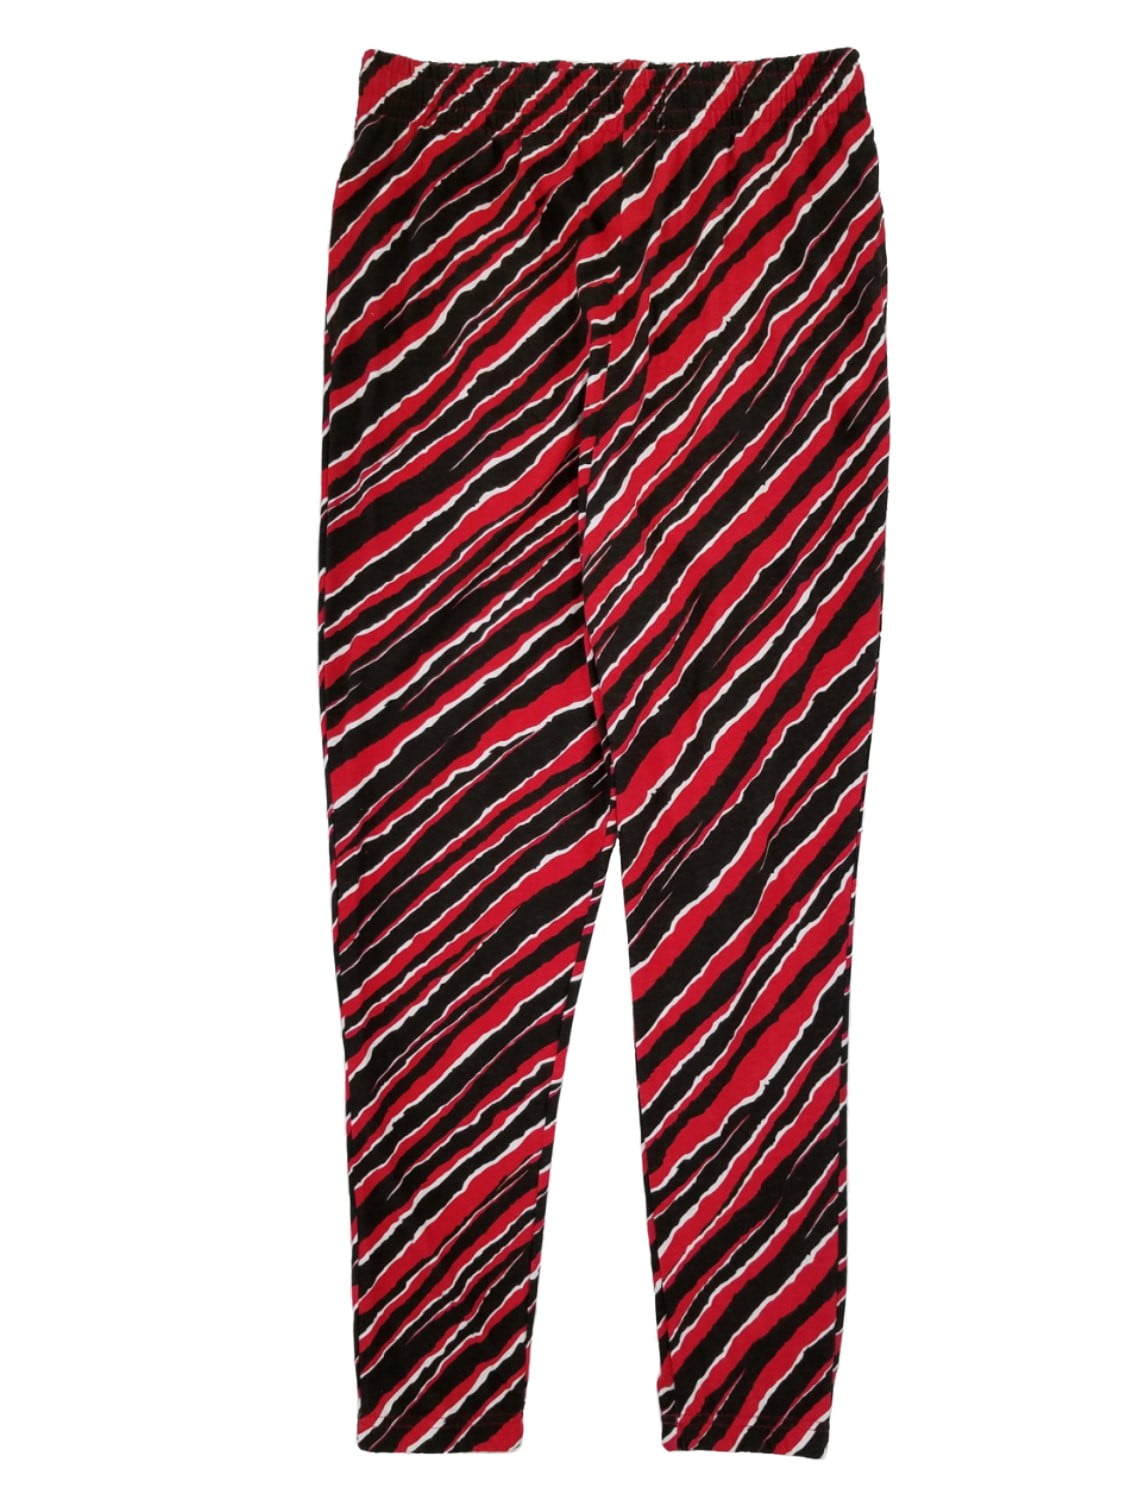 Mens Red Black & White Zebra Stripe Sleep Pants Lounge Pants Pajama ...